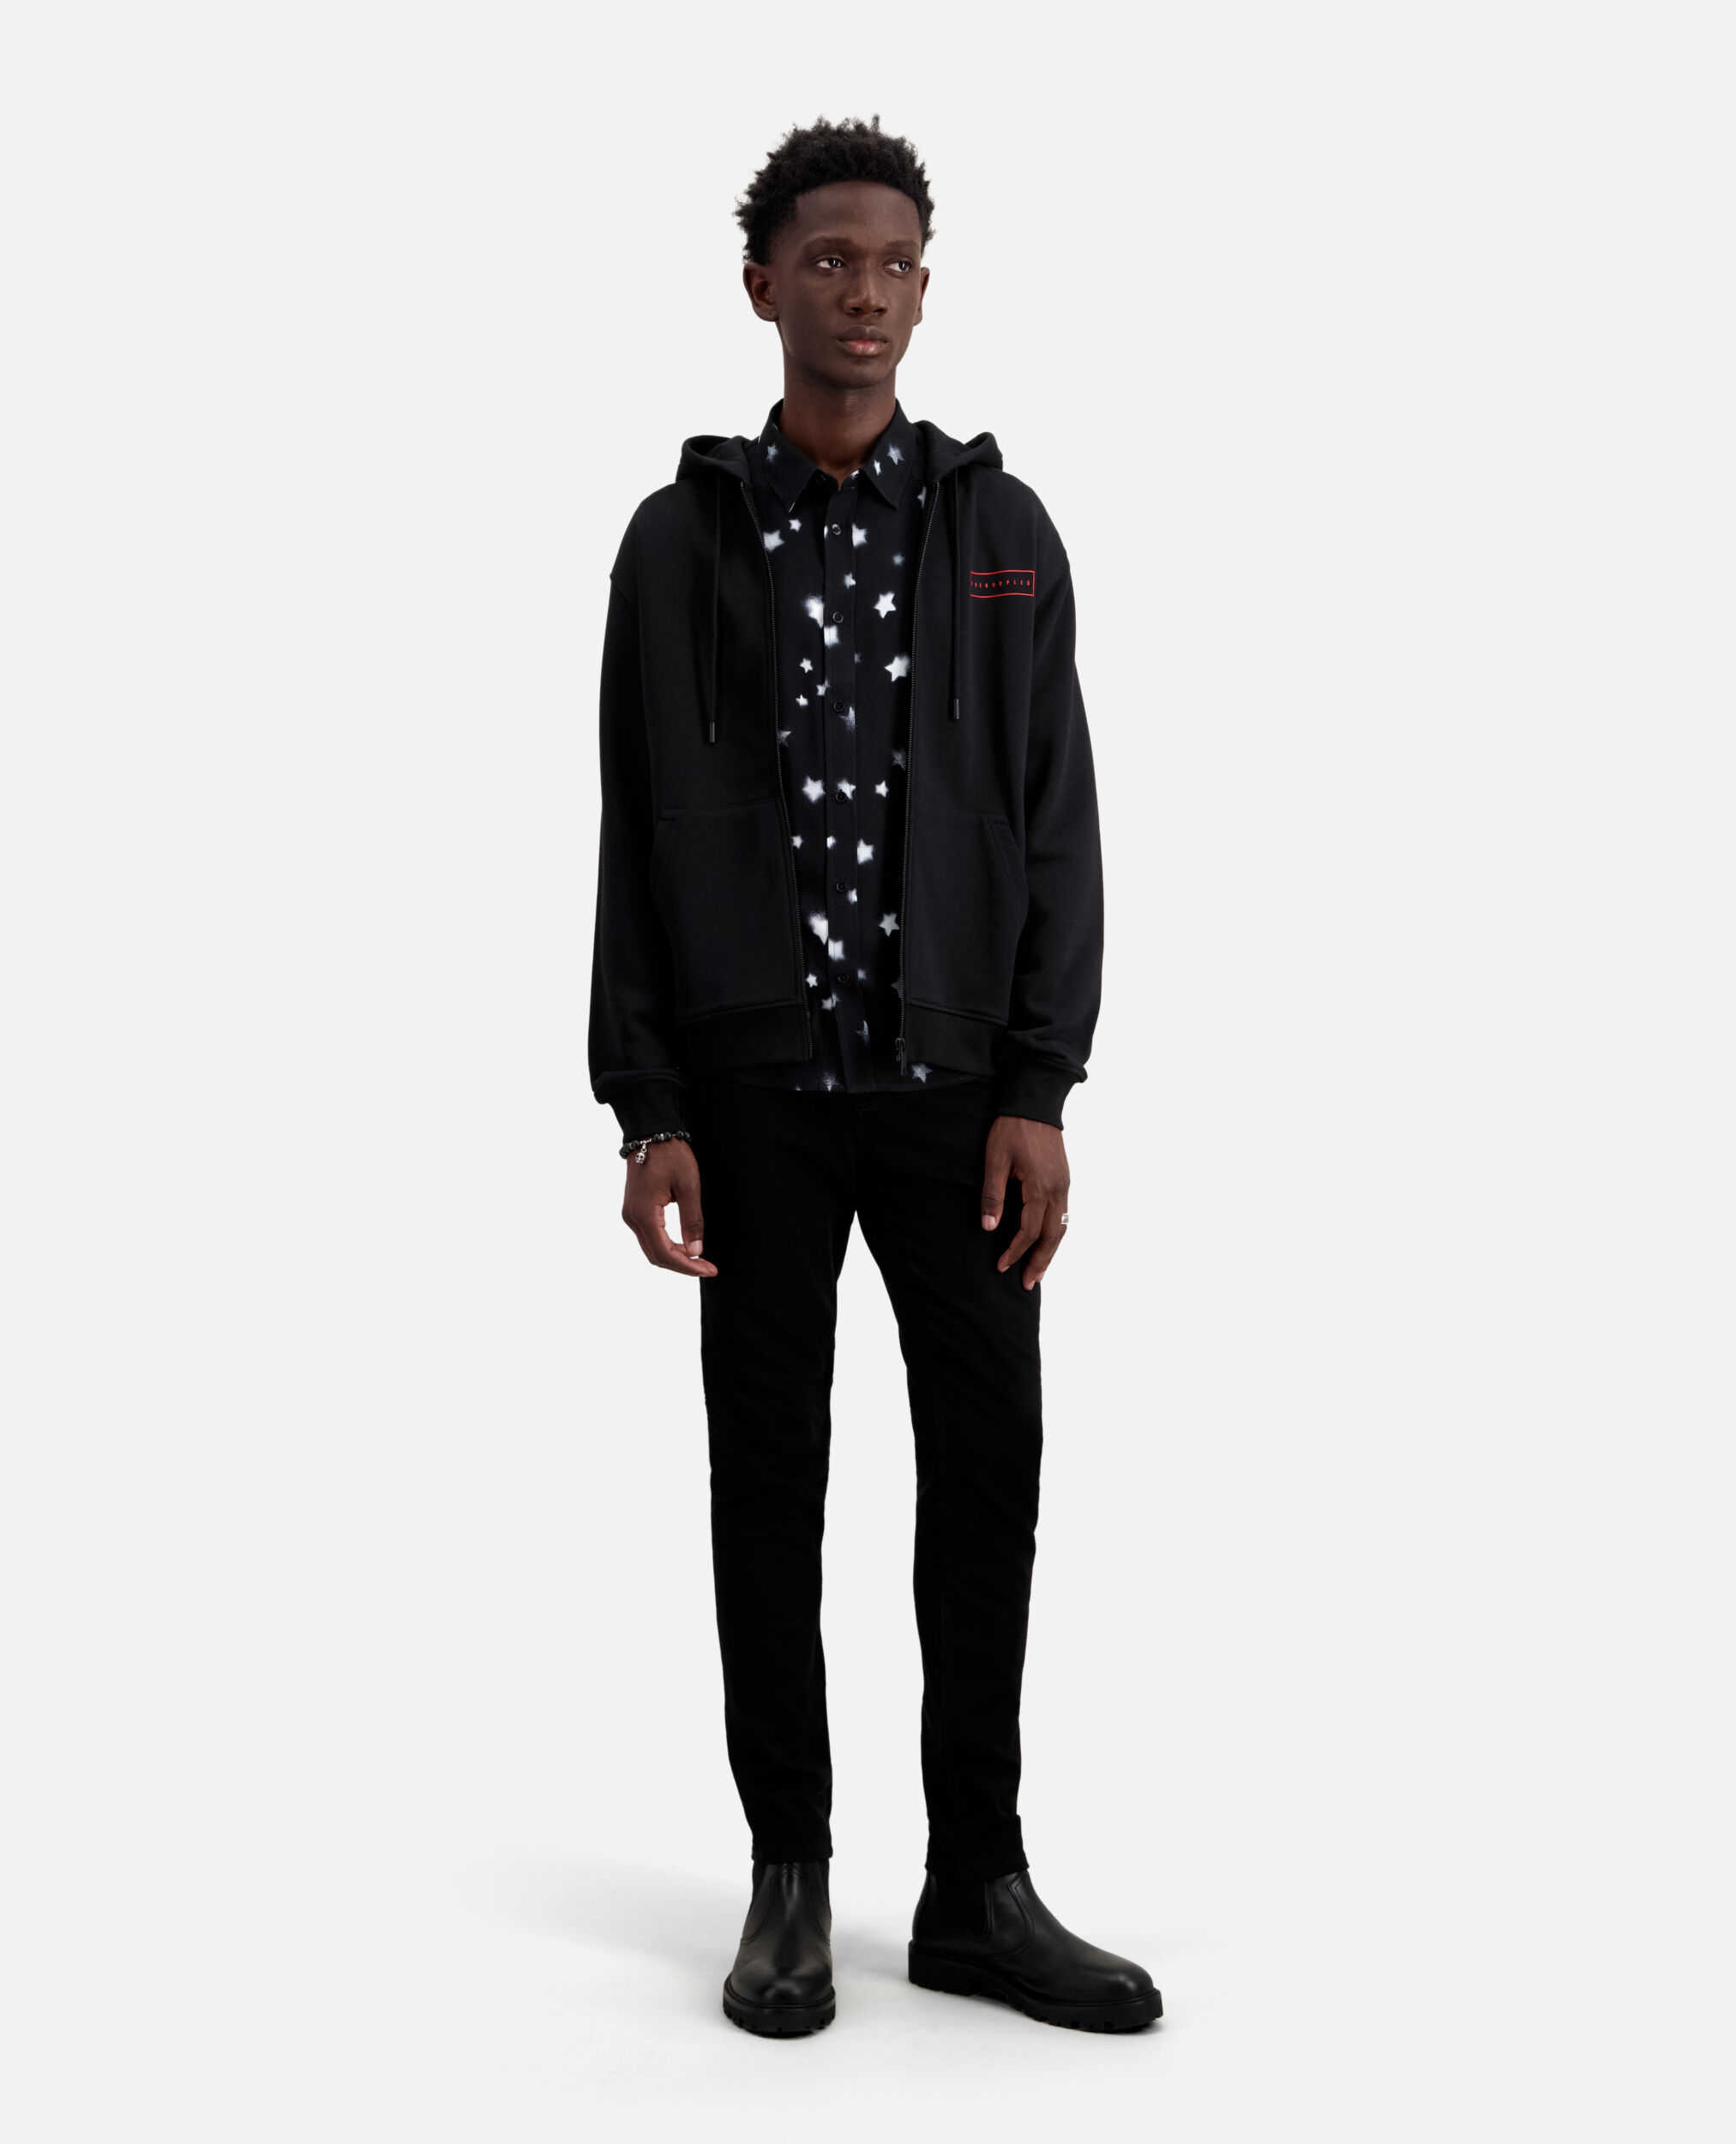 Schwarzes Kapuzensweatshirt mit Siebdruck X Rated, BLACK, hi-res image number null